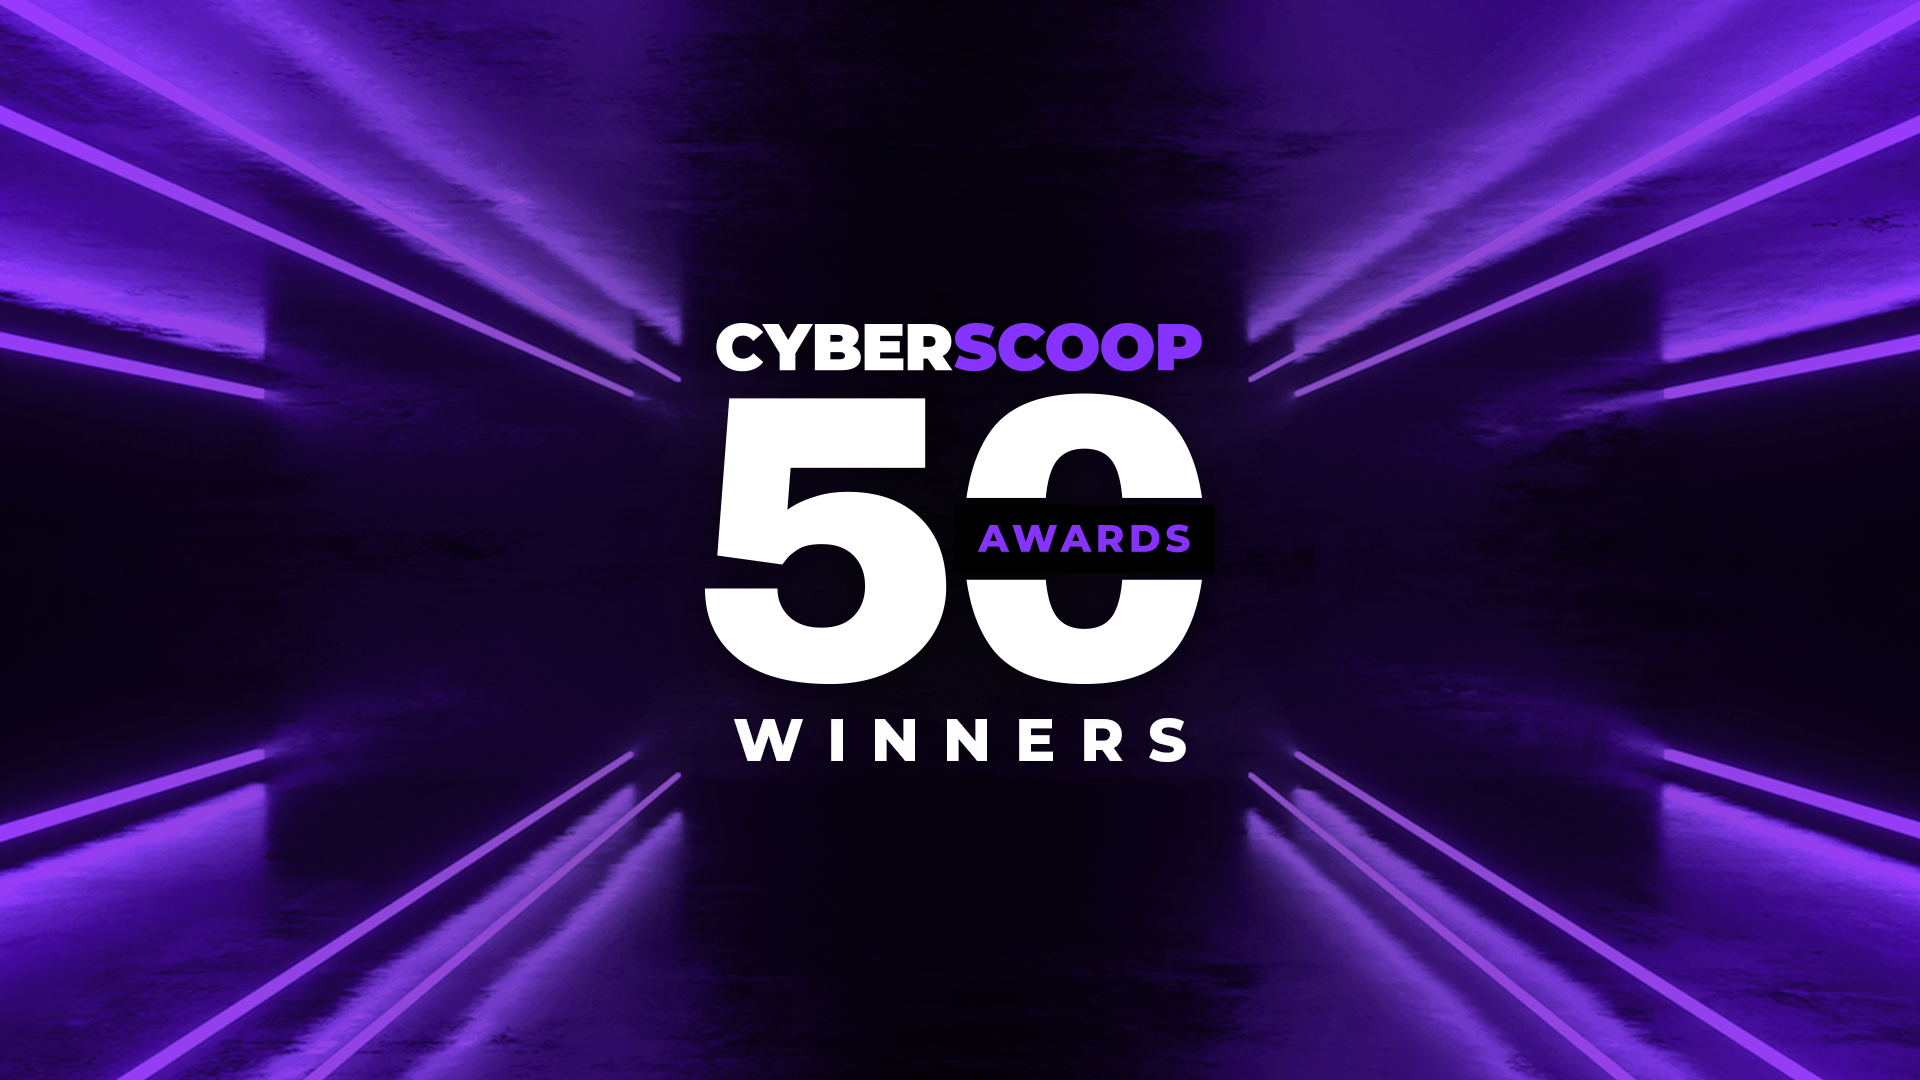 Announcing the 2022 CyberScoop 50 award winners